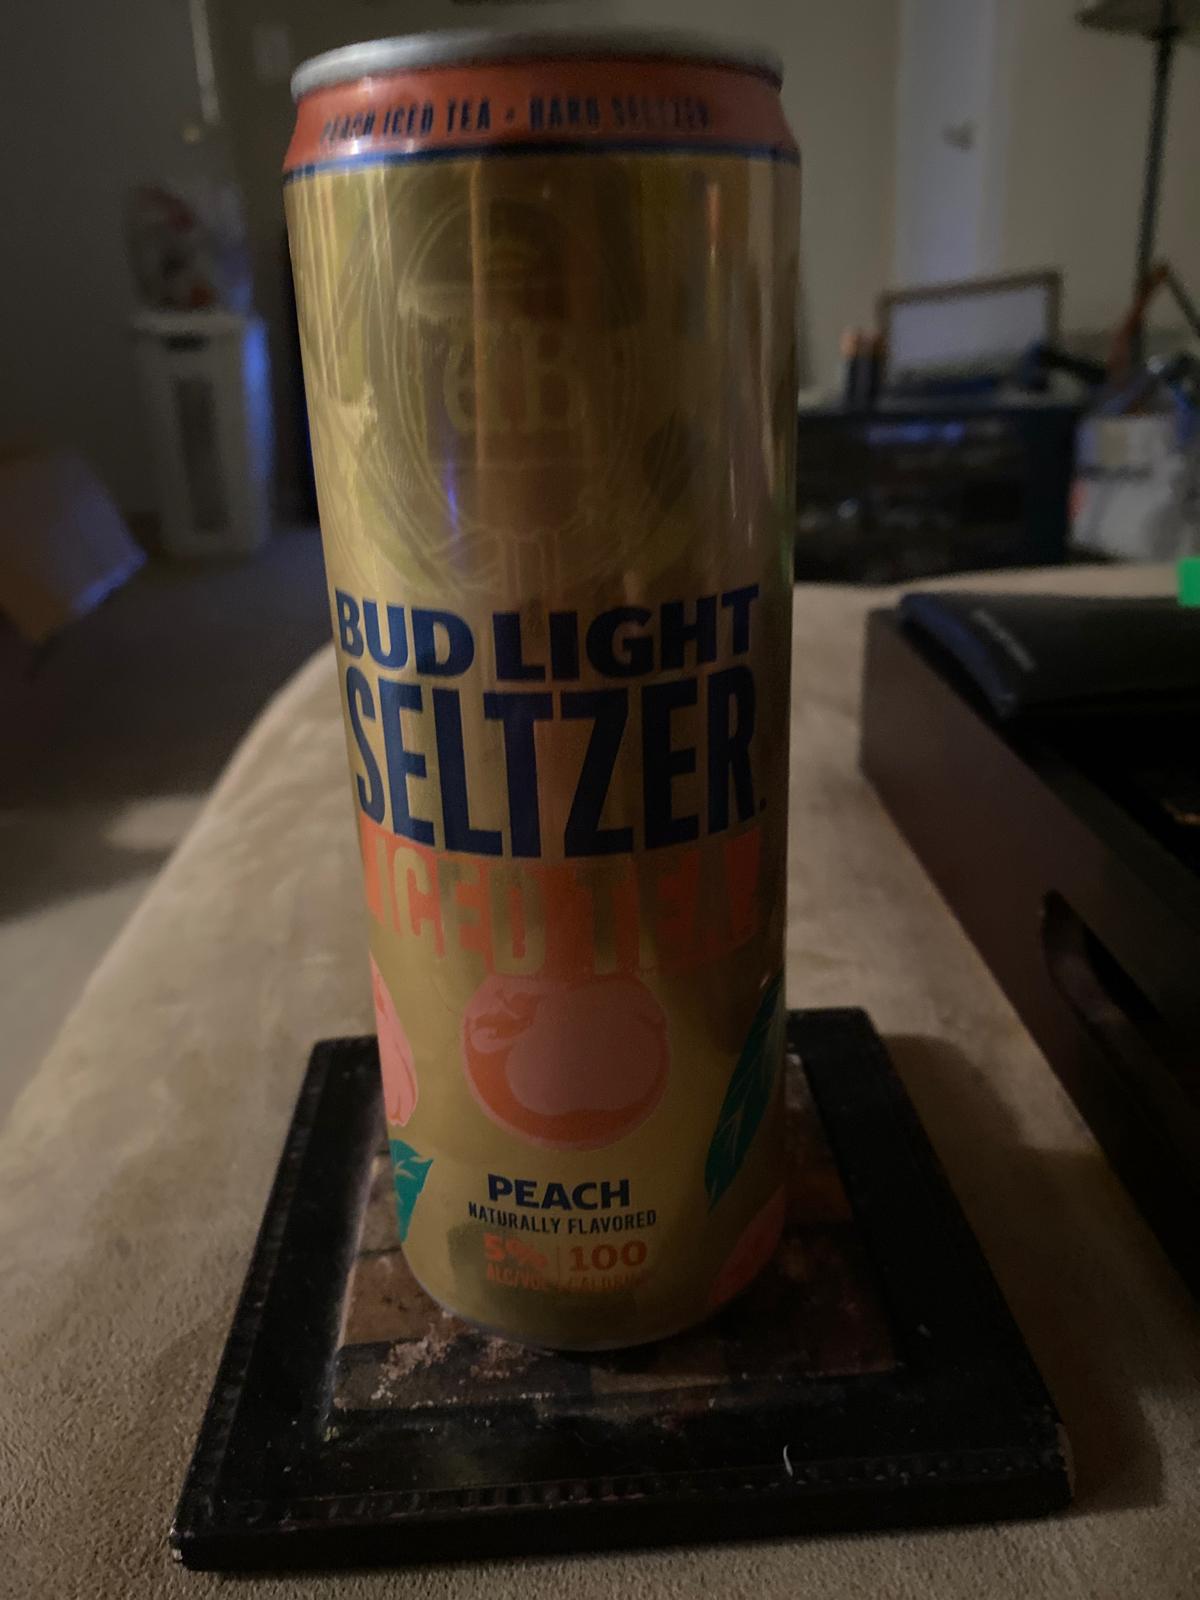 Bud Light Seltzer Ice Tea Peach